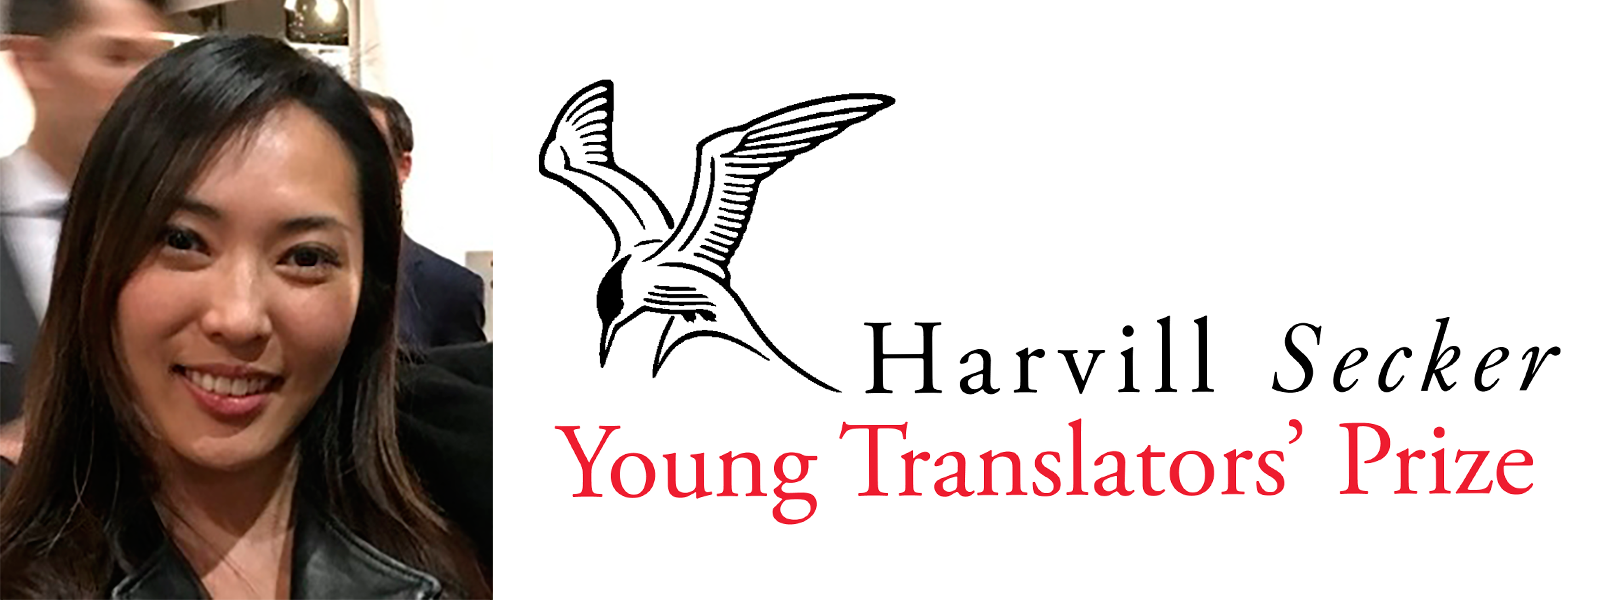 Harvill Secker Young Translators' Prize 2017